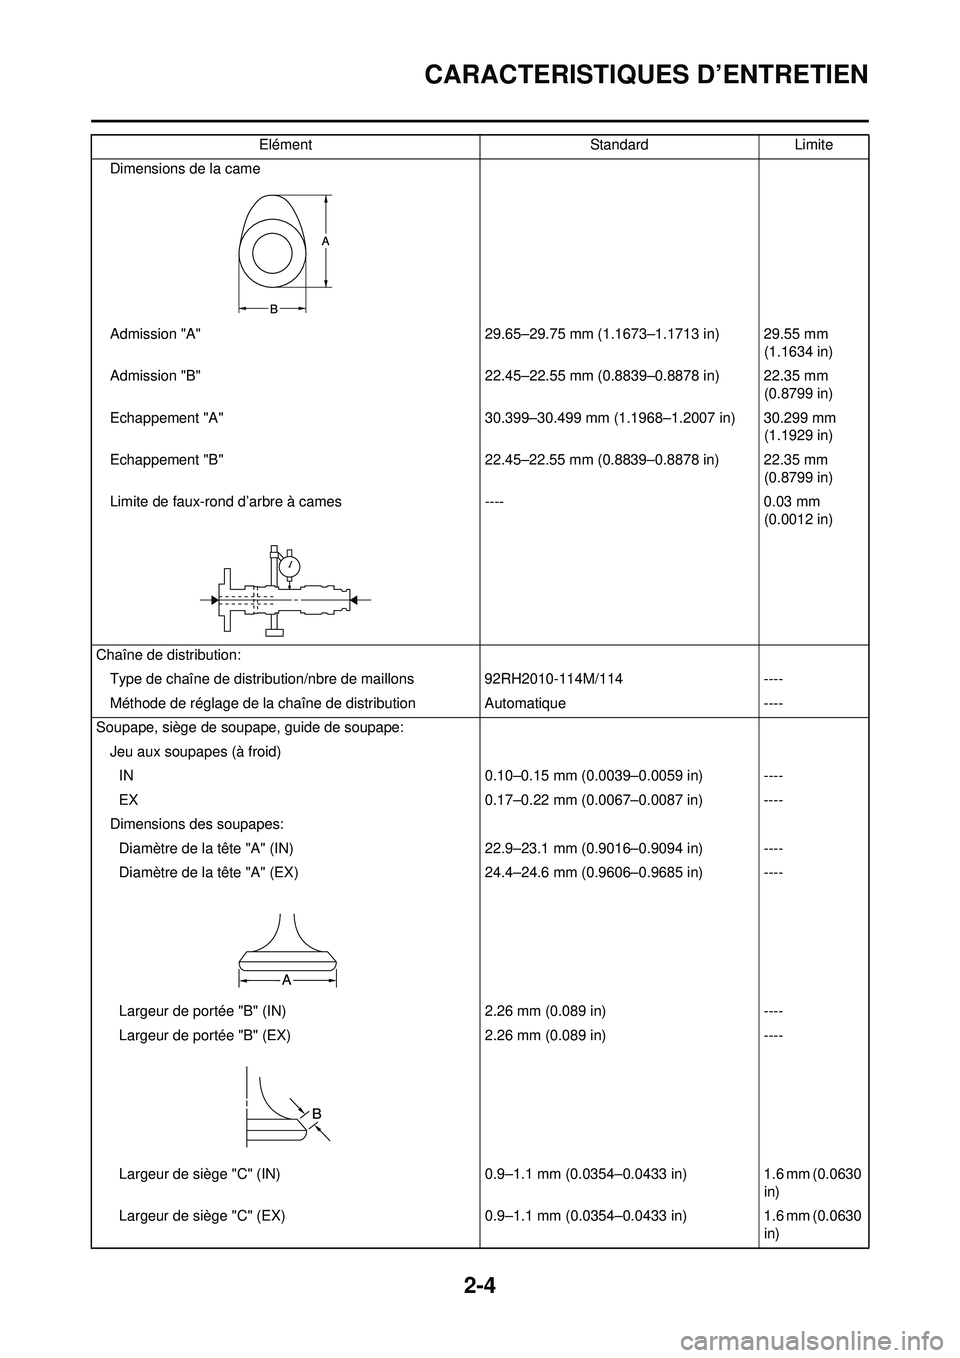 YAMAHA WR 250F 2009  Notices Demploi (in French) 2-4
CARACTERISTIQUES D’ENTRETIEN
Dimensions de la came
Admission "A" 29.65–29.75 mm (1.1673–1.1713 in) 29.55 mm (1.1634 in)
Admission "B" 22.45–22.55 mm (0.8839–0.8878 in) 22.35 mm  (0.8799 